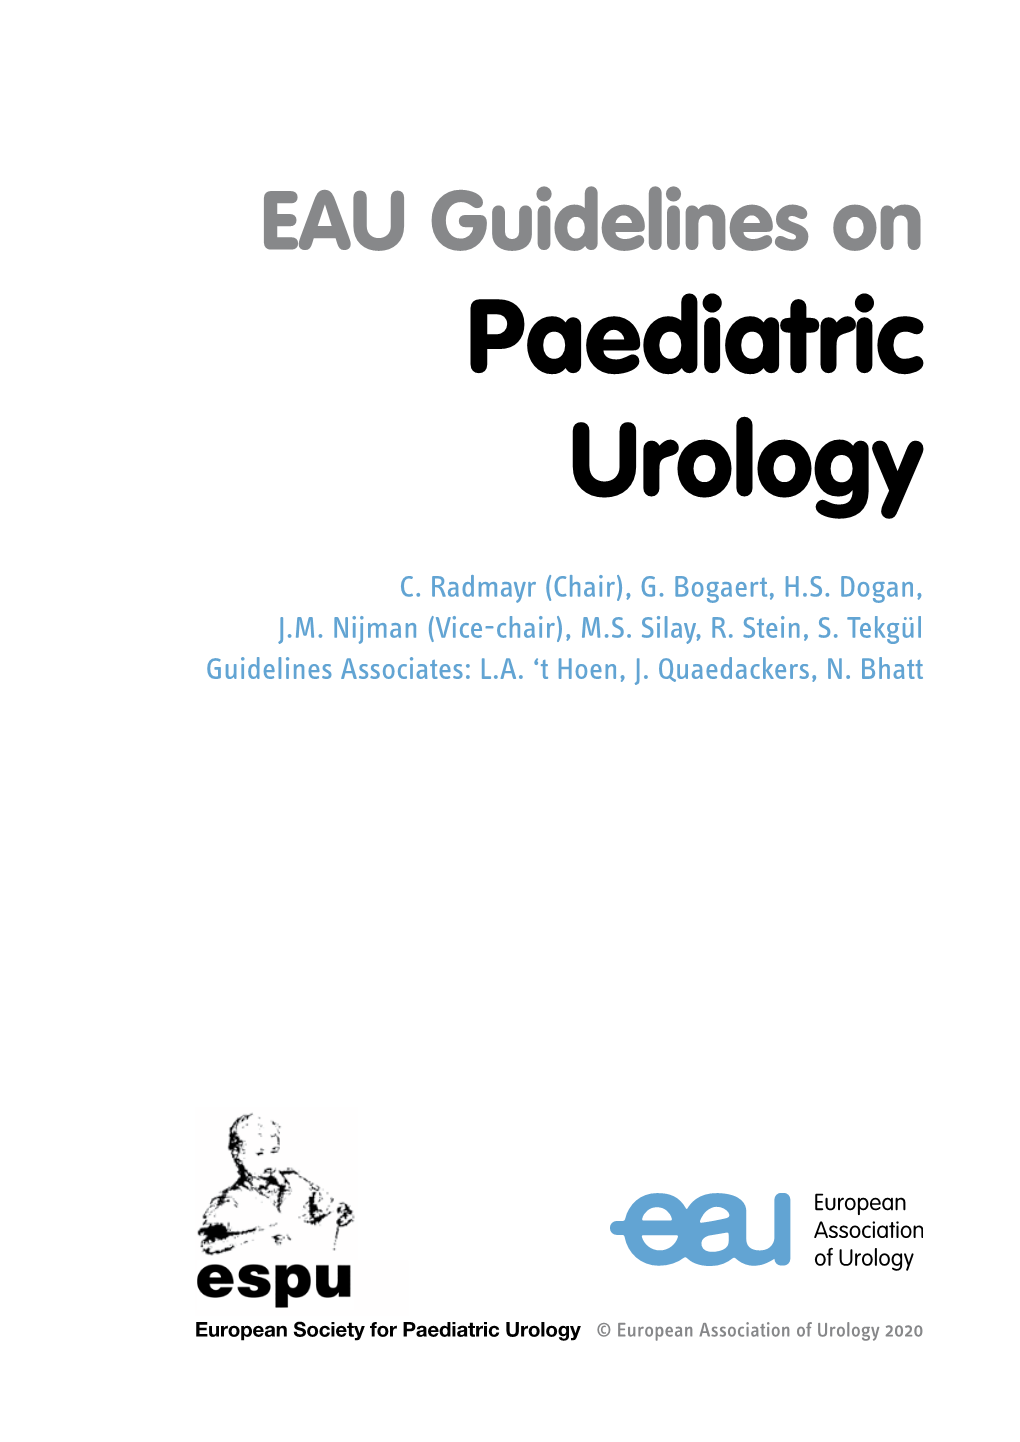 EAU-ESPU Guidelines on Paediatric Urology 2020